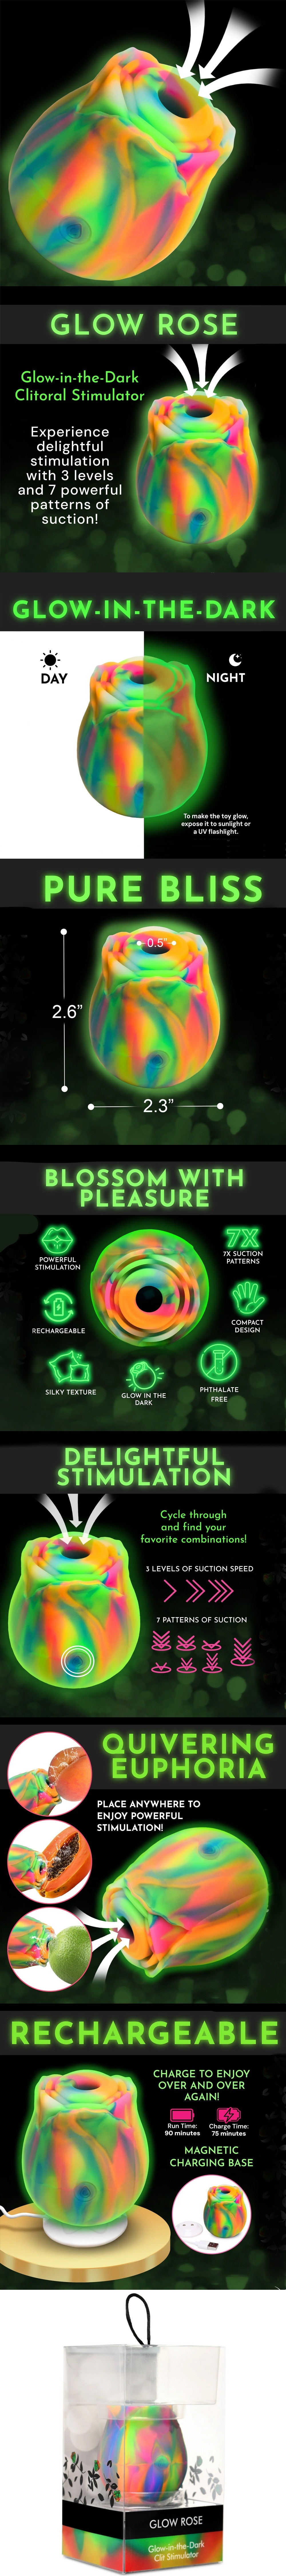 Bloomgasm Glow Rose Glow-in-the-Dark Clitoral Stimulator Rose Vibrator